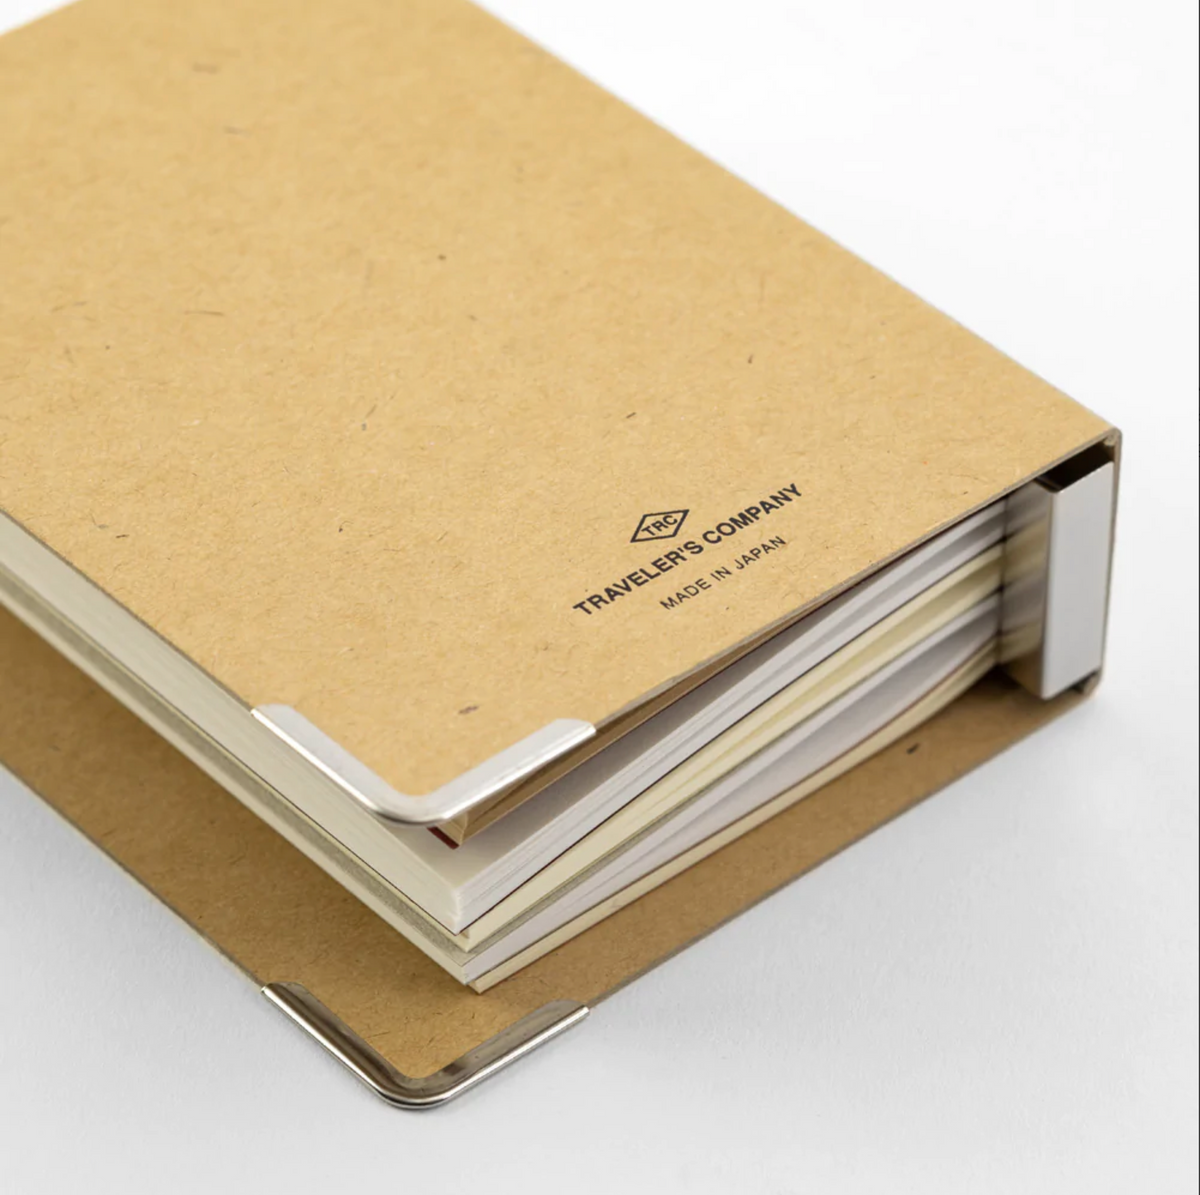 Traveler's Company 016 Notebook Refill Binder (passport sized)